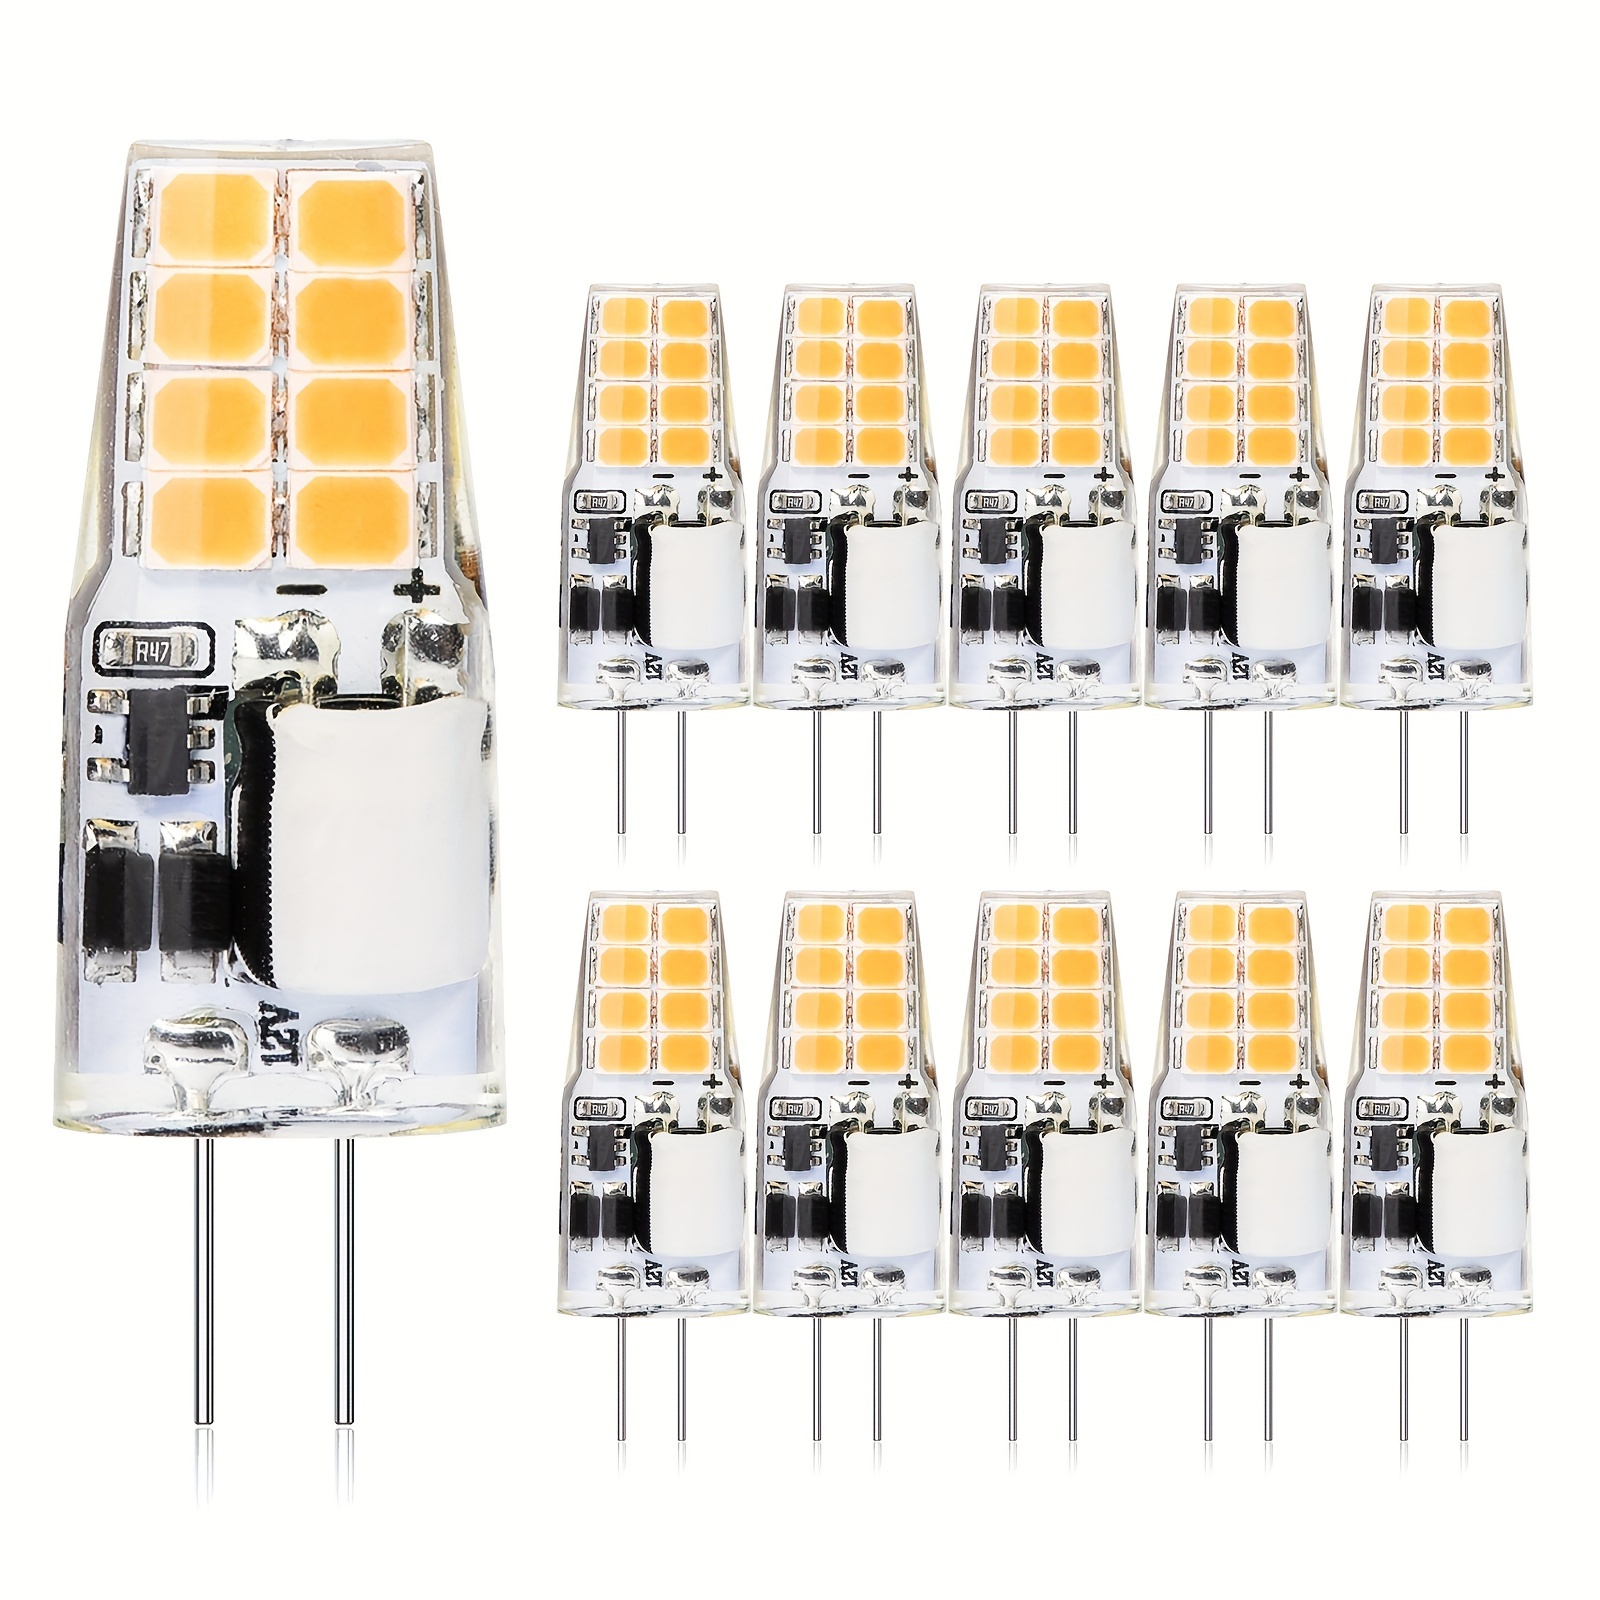 10/20Pcs G4 20W 2835 SMD Bi-pin 12 LED Lamp Light Bulb DC 12V 6000K White &  Warm